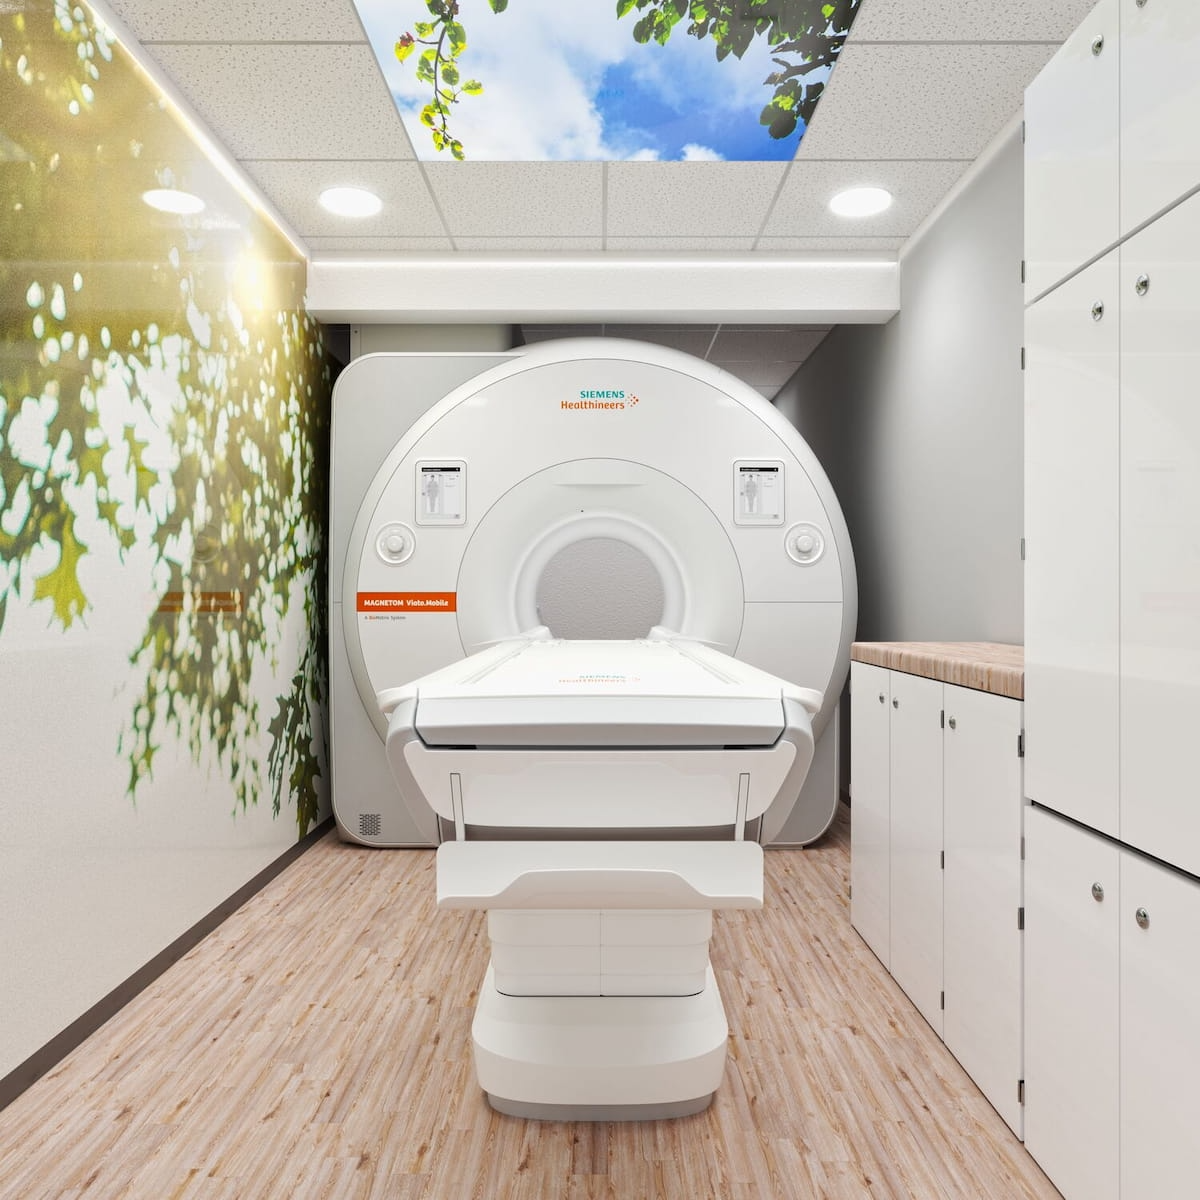 FDA Clears New Mobile MRI Scanner from Siemens Healthineers